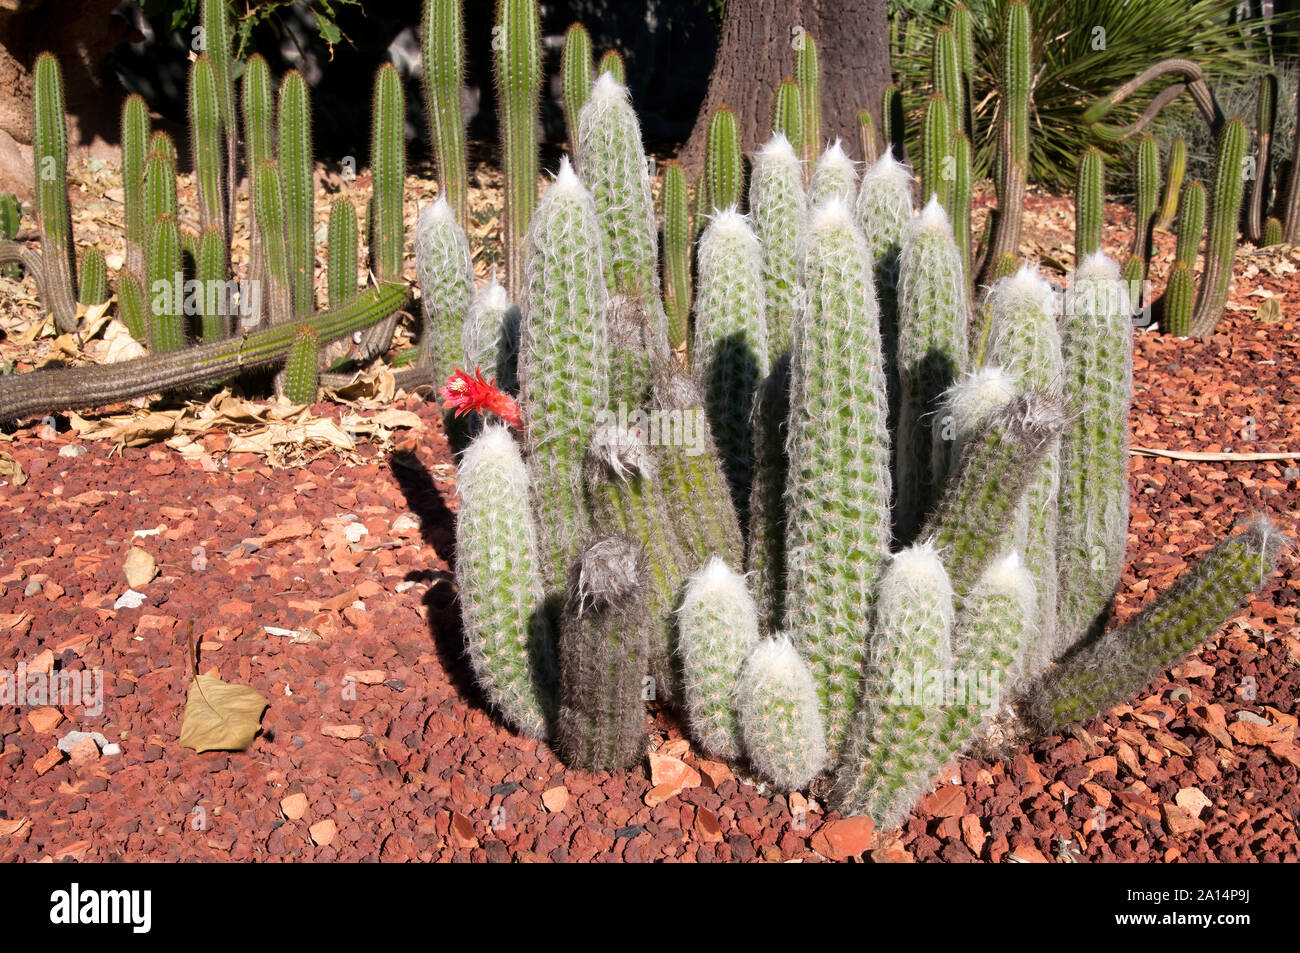 Sydney Australia, flowering touch cactus in garden Stock Photo